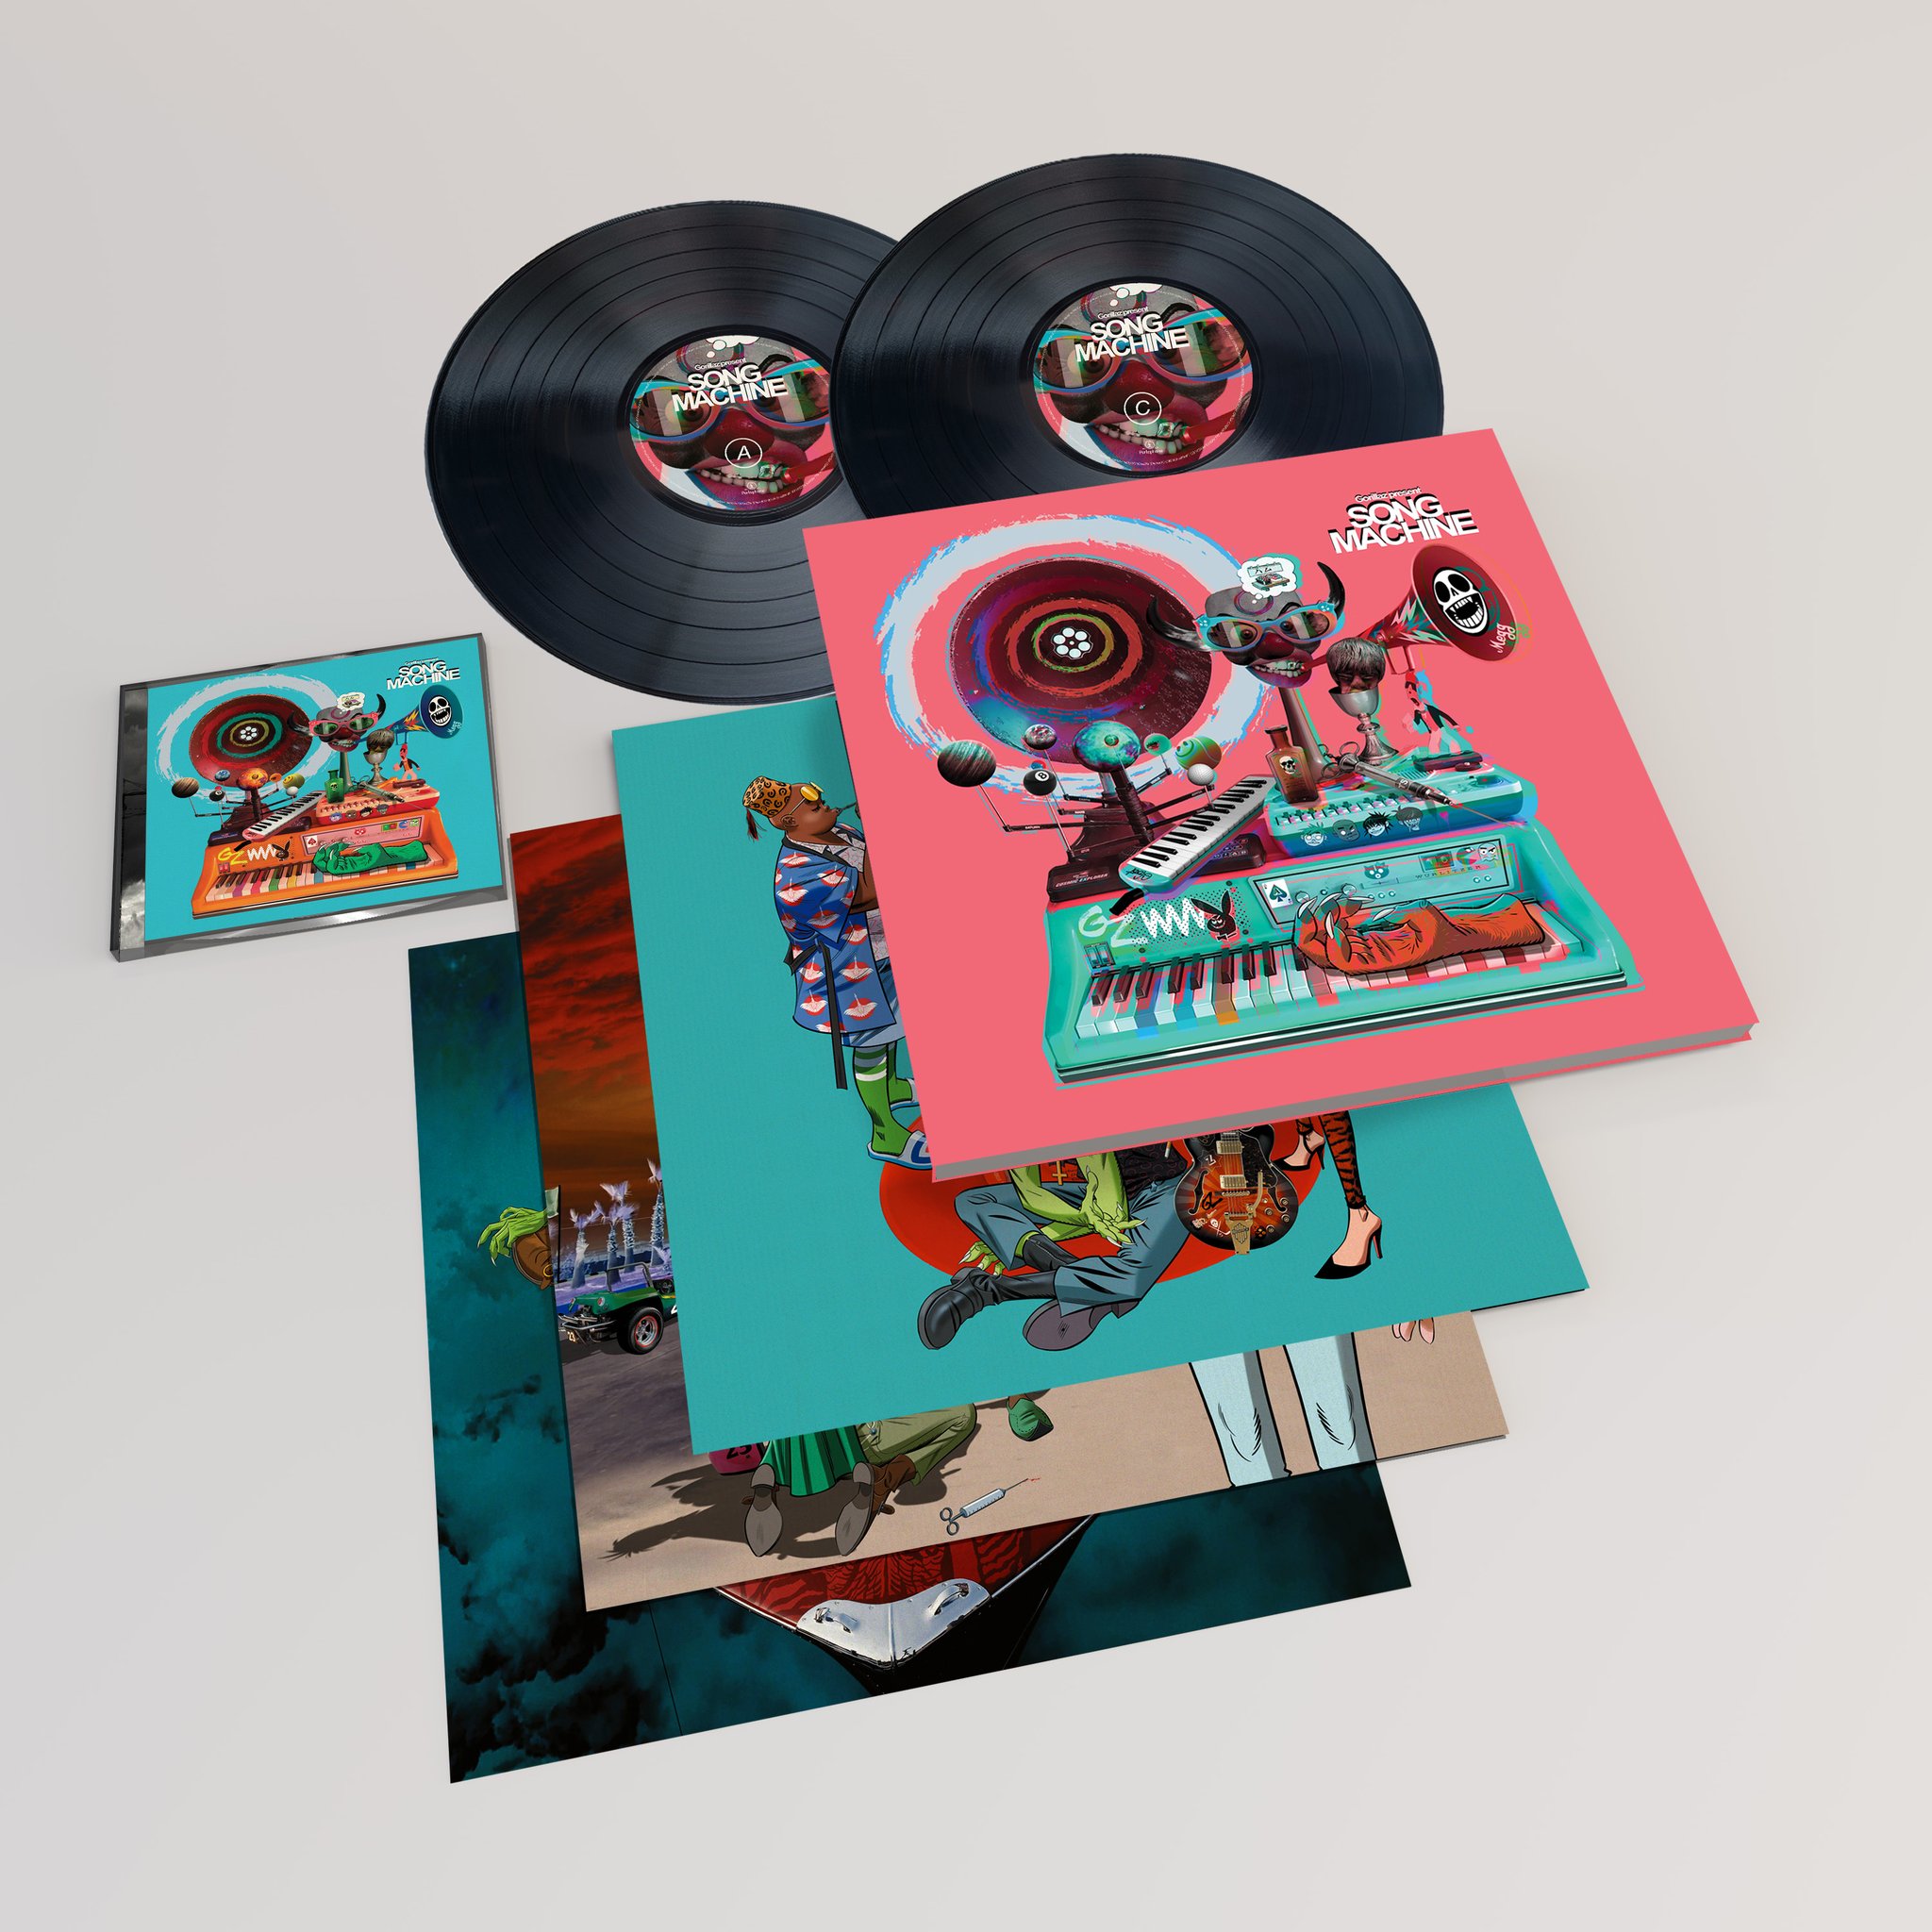 Gorillaz - Song Machine Season One (Deluxe Edition)